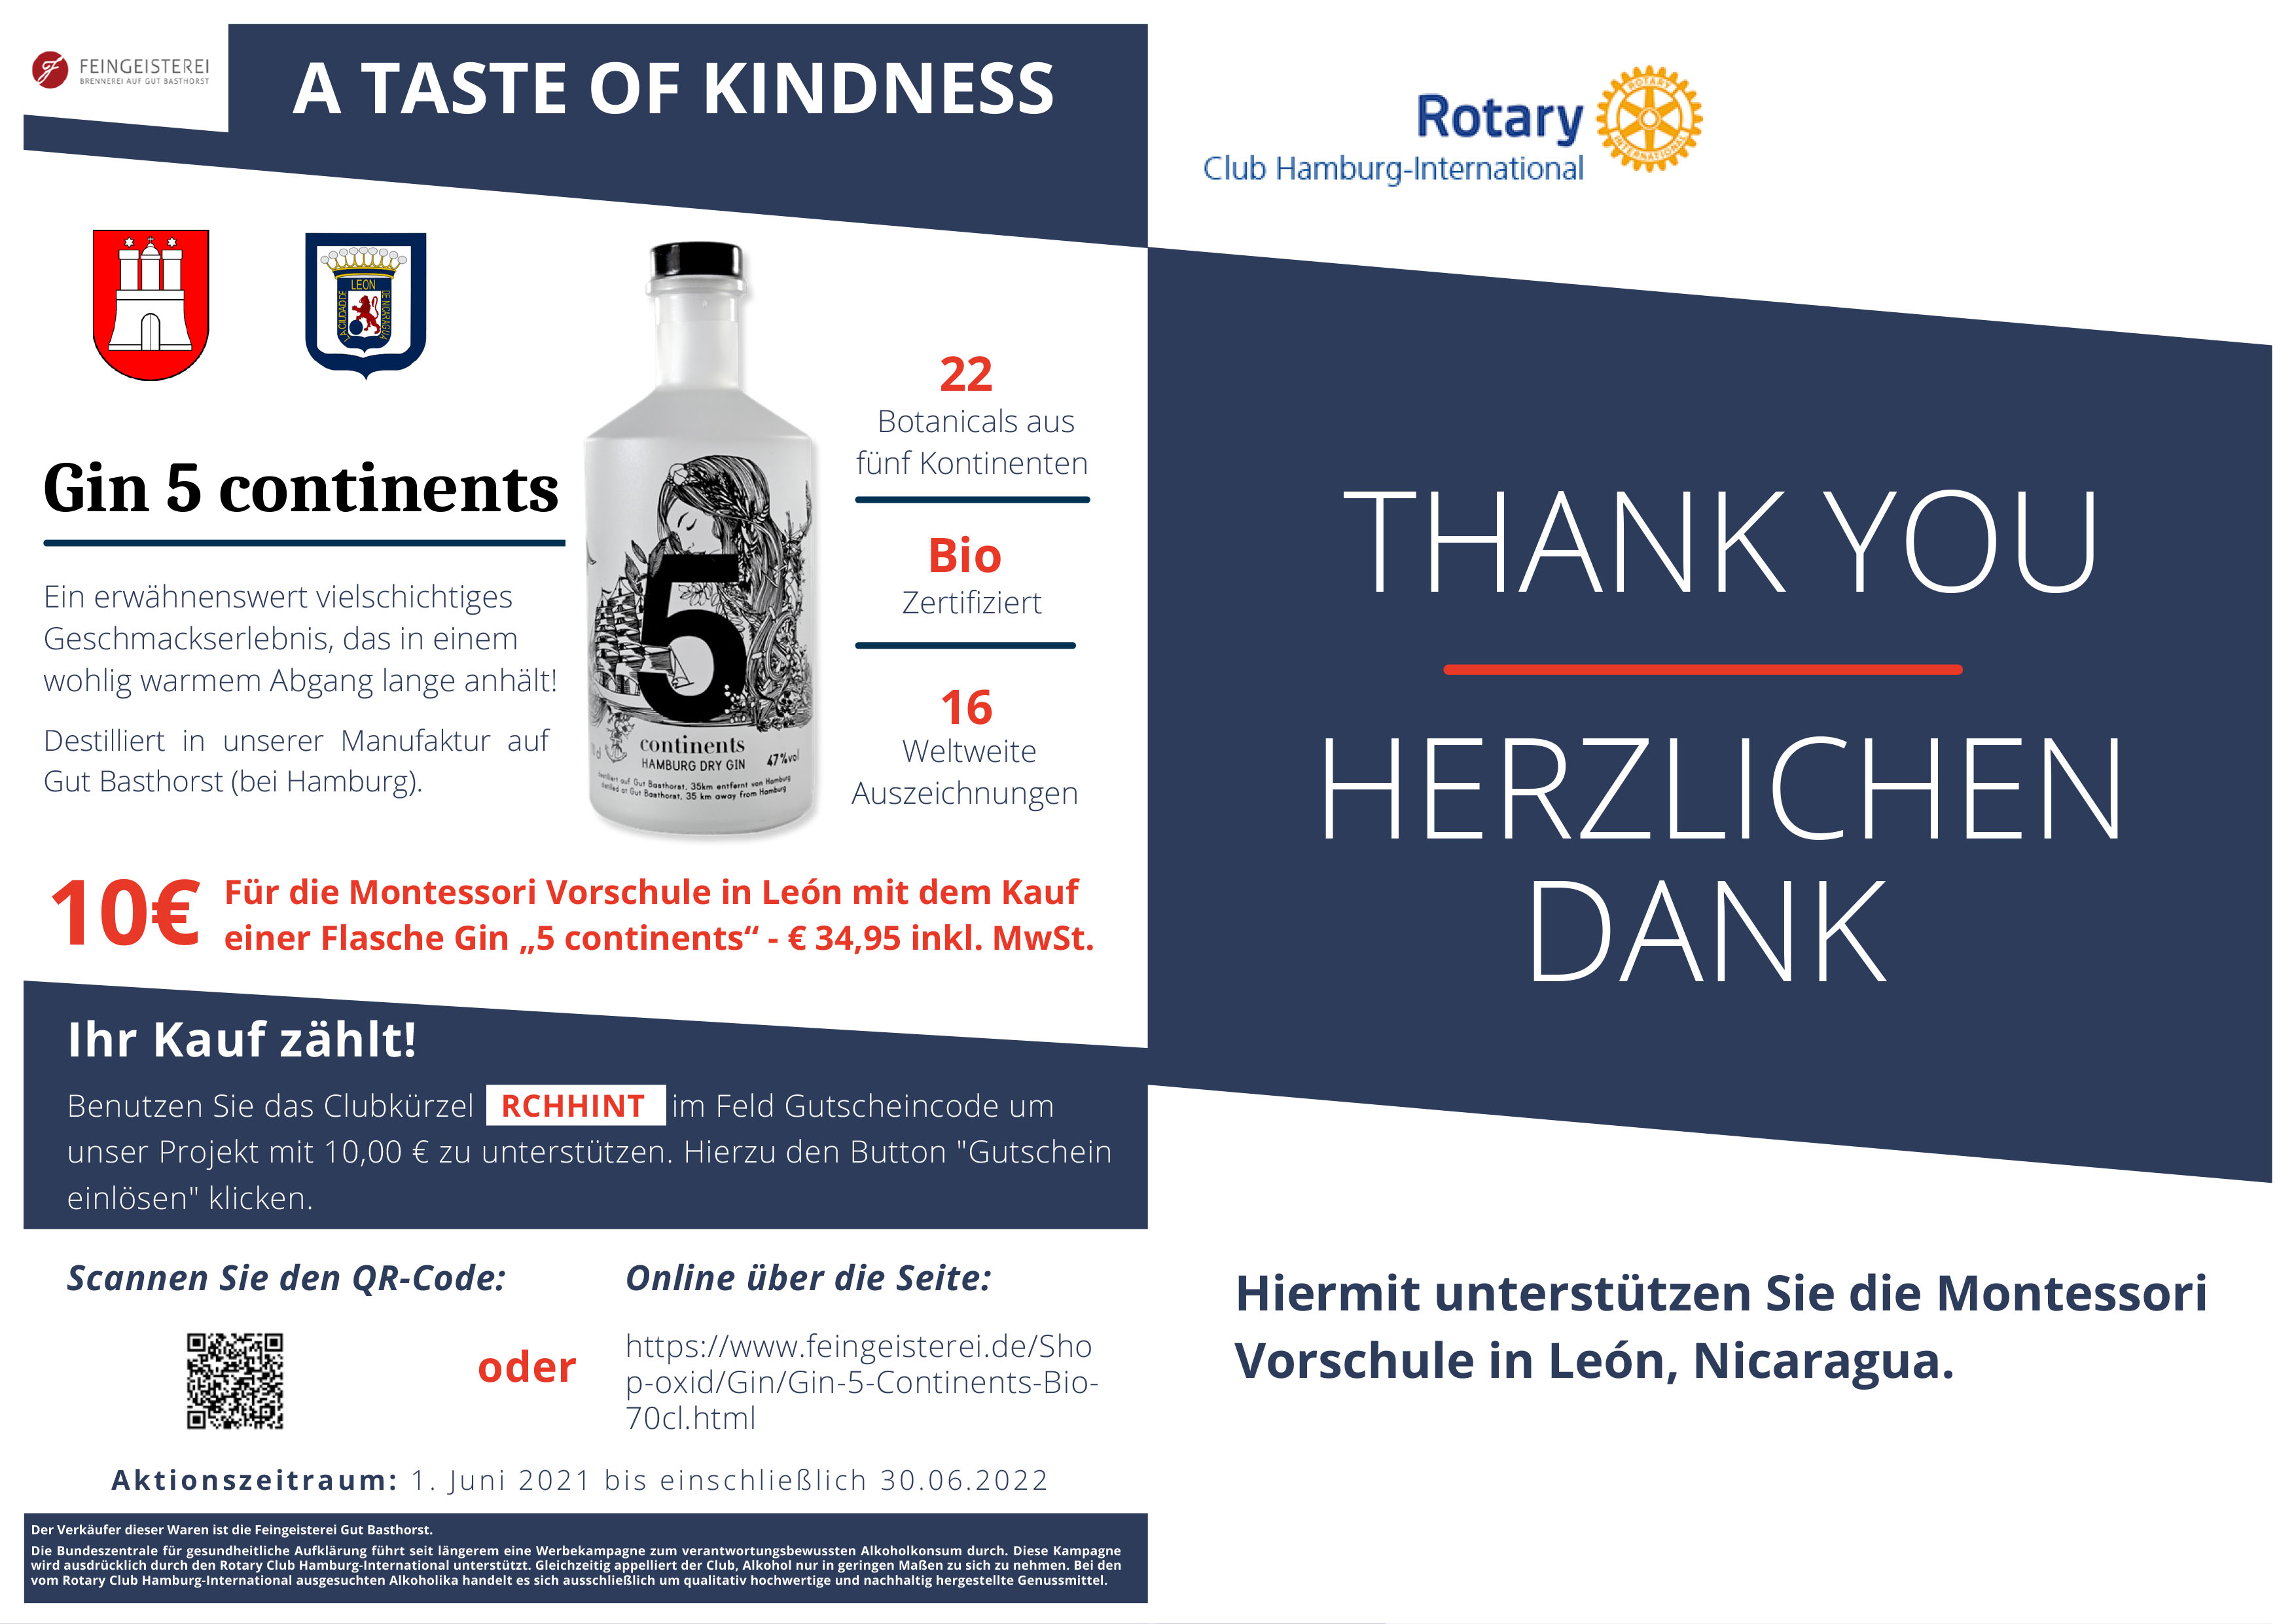 Gin 5 continents  -  Rotary Club Hamburg International 